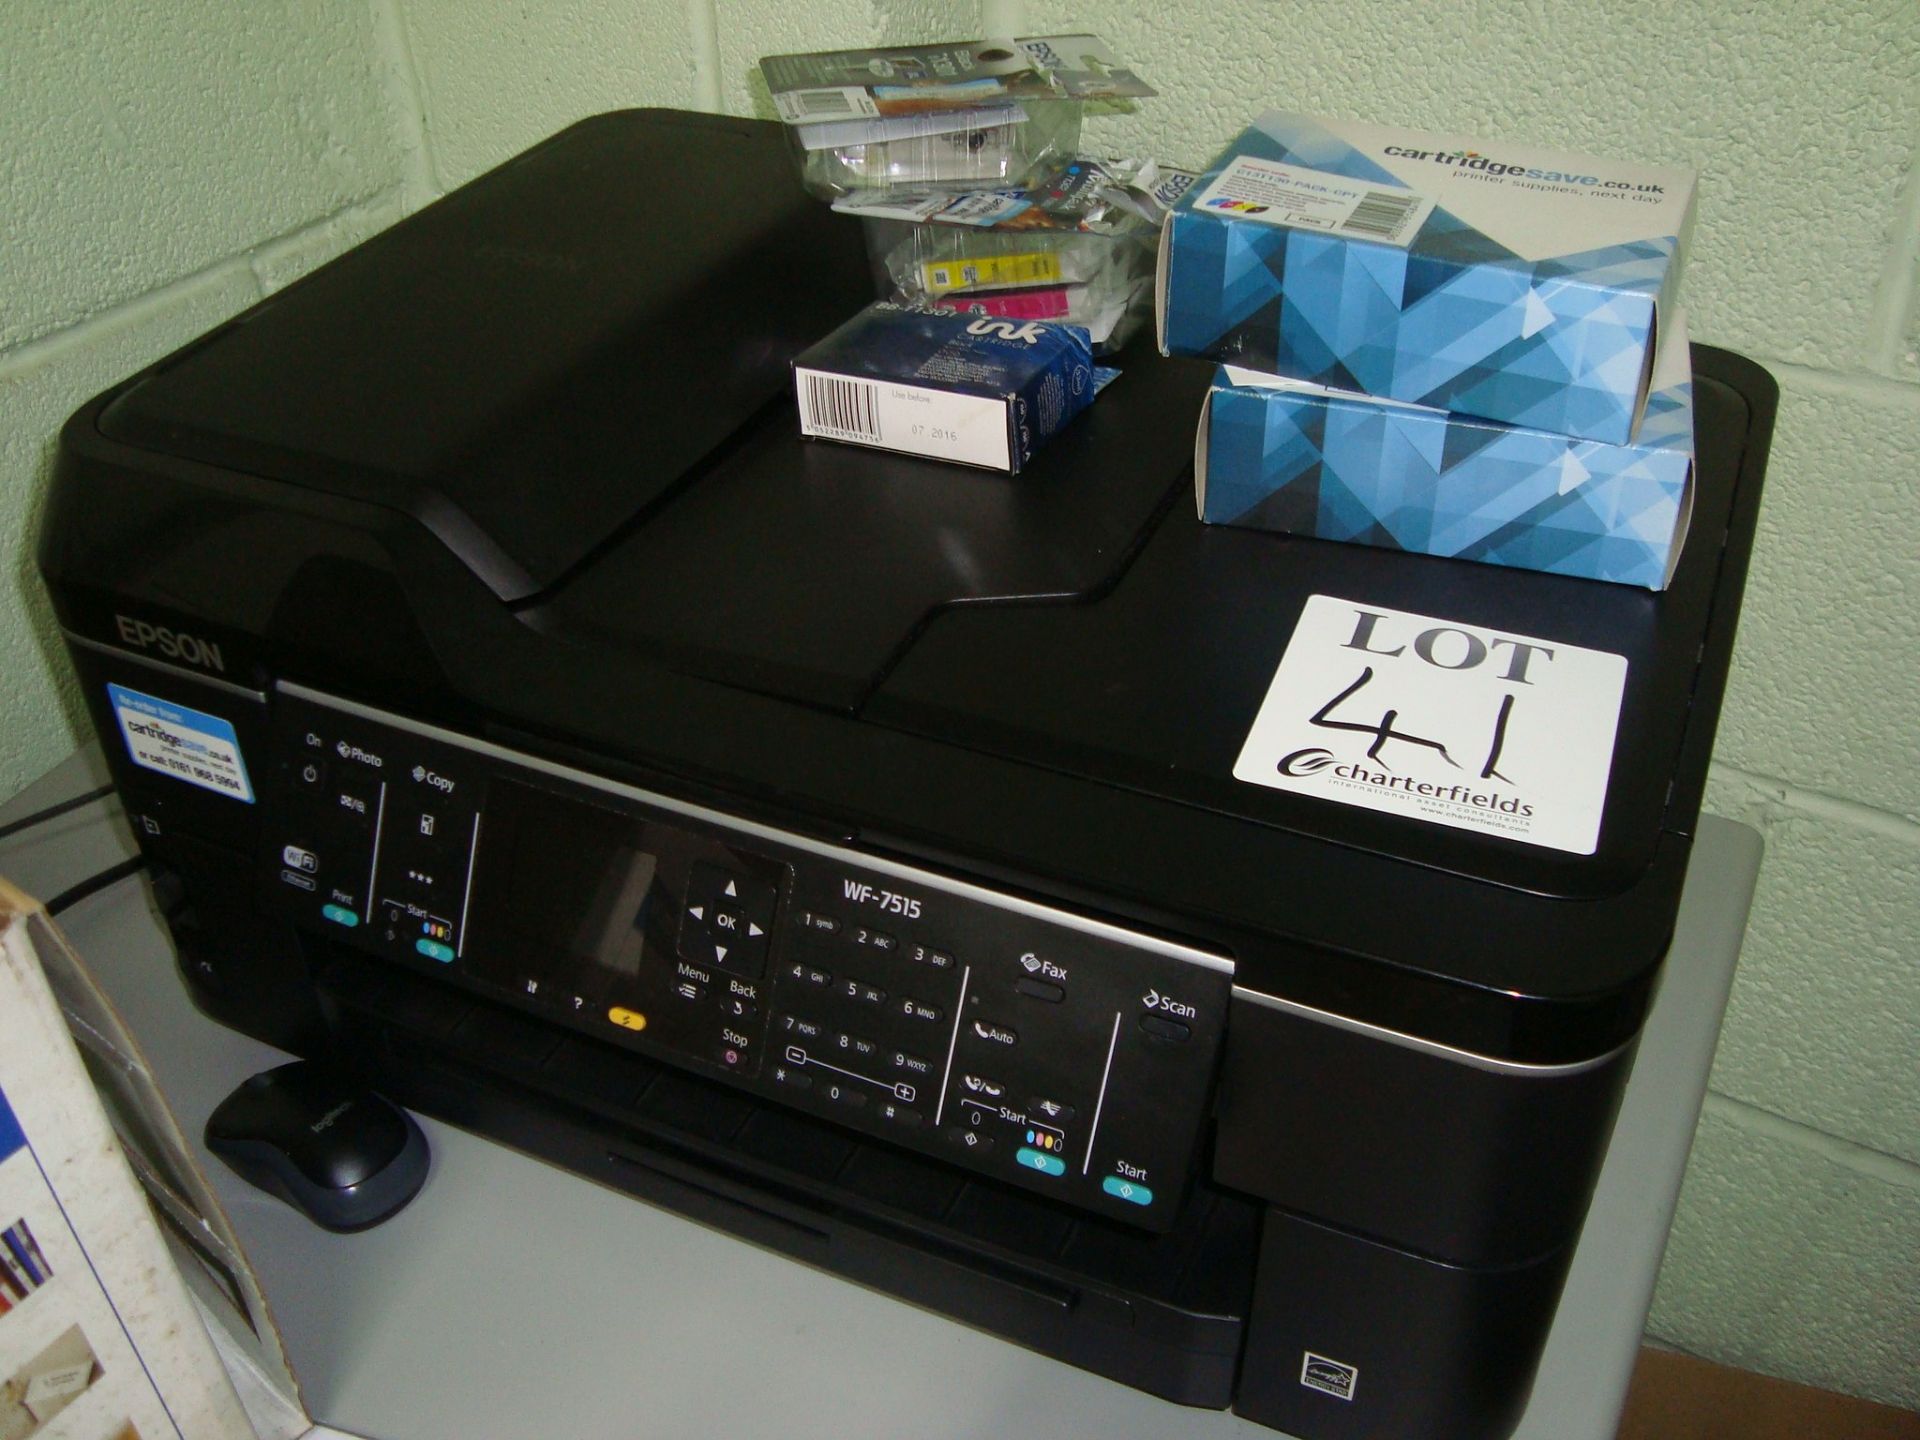 An Epson WF-7515 multifunction office printer